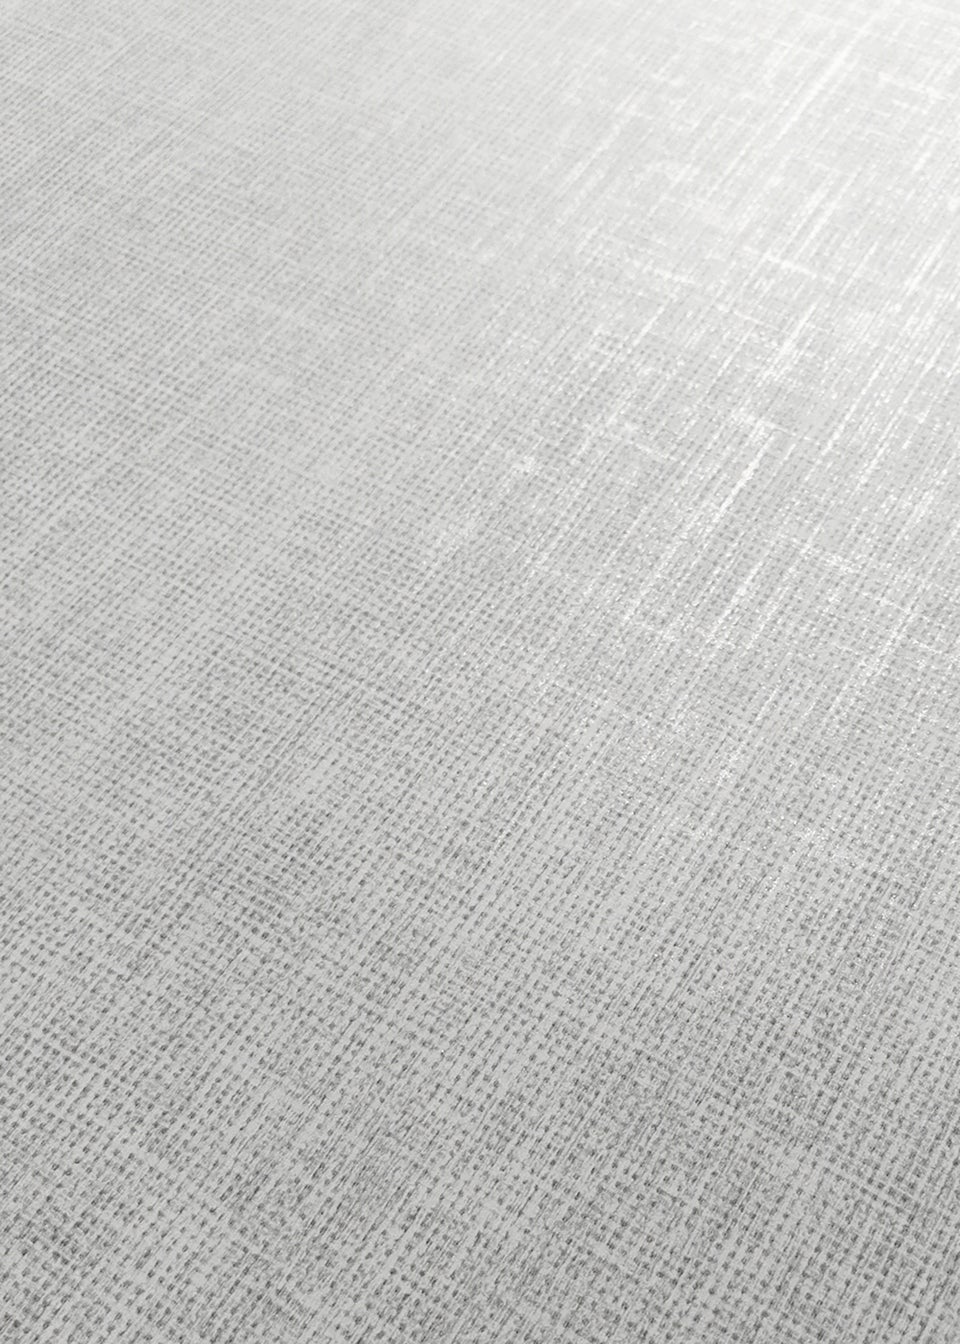 Muriva Darcy James Linen Texture Wallpaper